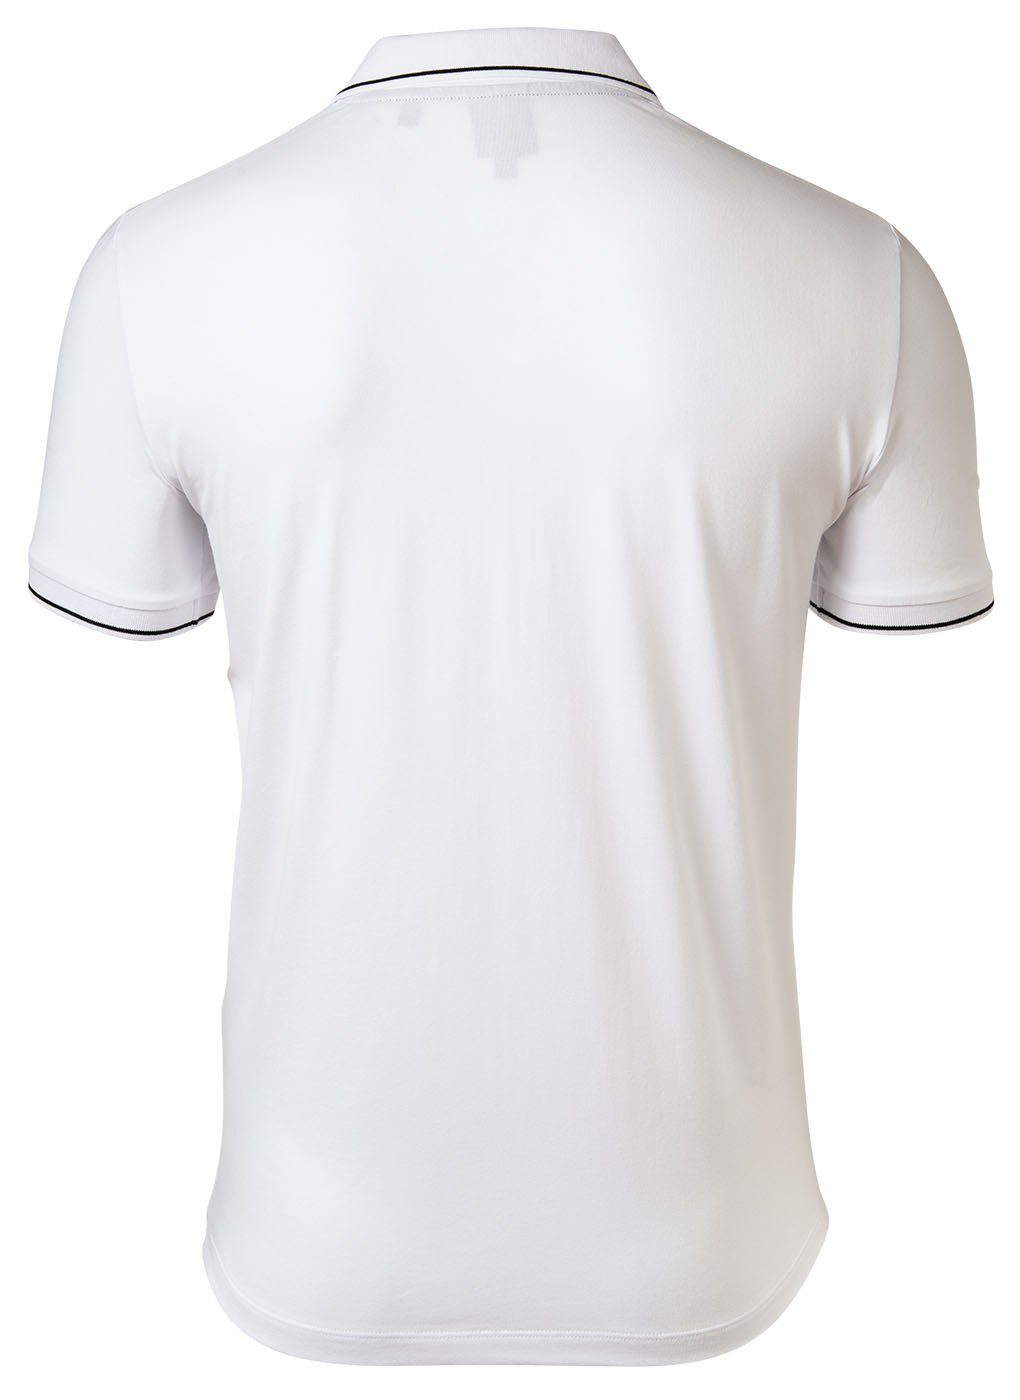 ARMANI EXCHANGE Herren Poloshirt Weiß Buttons, - Poloshirt Hidden Cotton Stretch